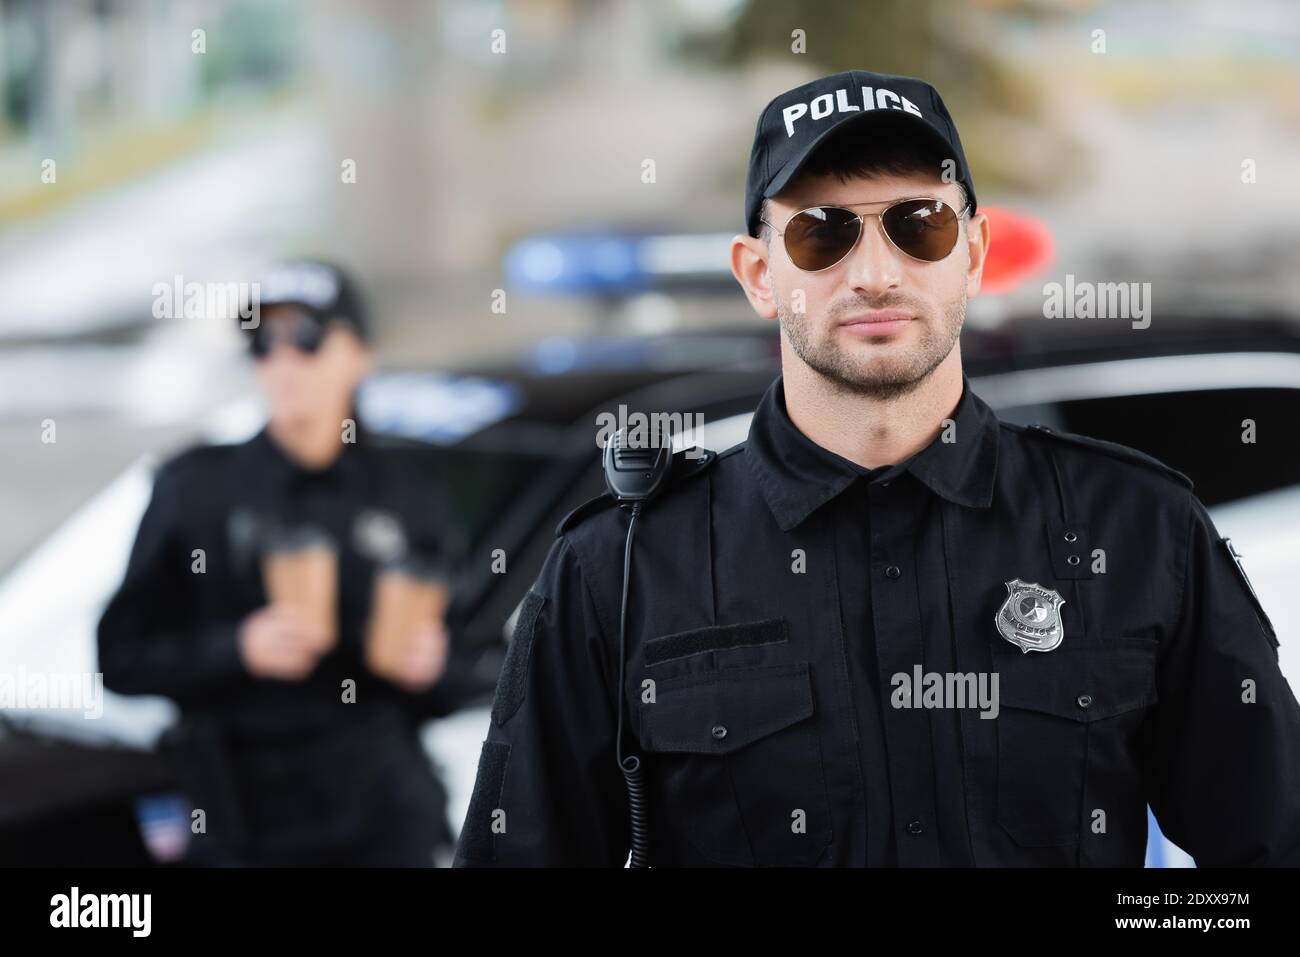 Police with sunglasses -Fotos und -Bildmaterial in hoher Auflösung – Alamy